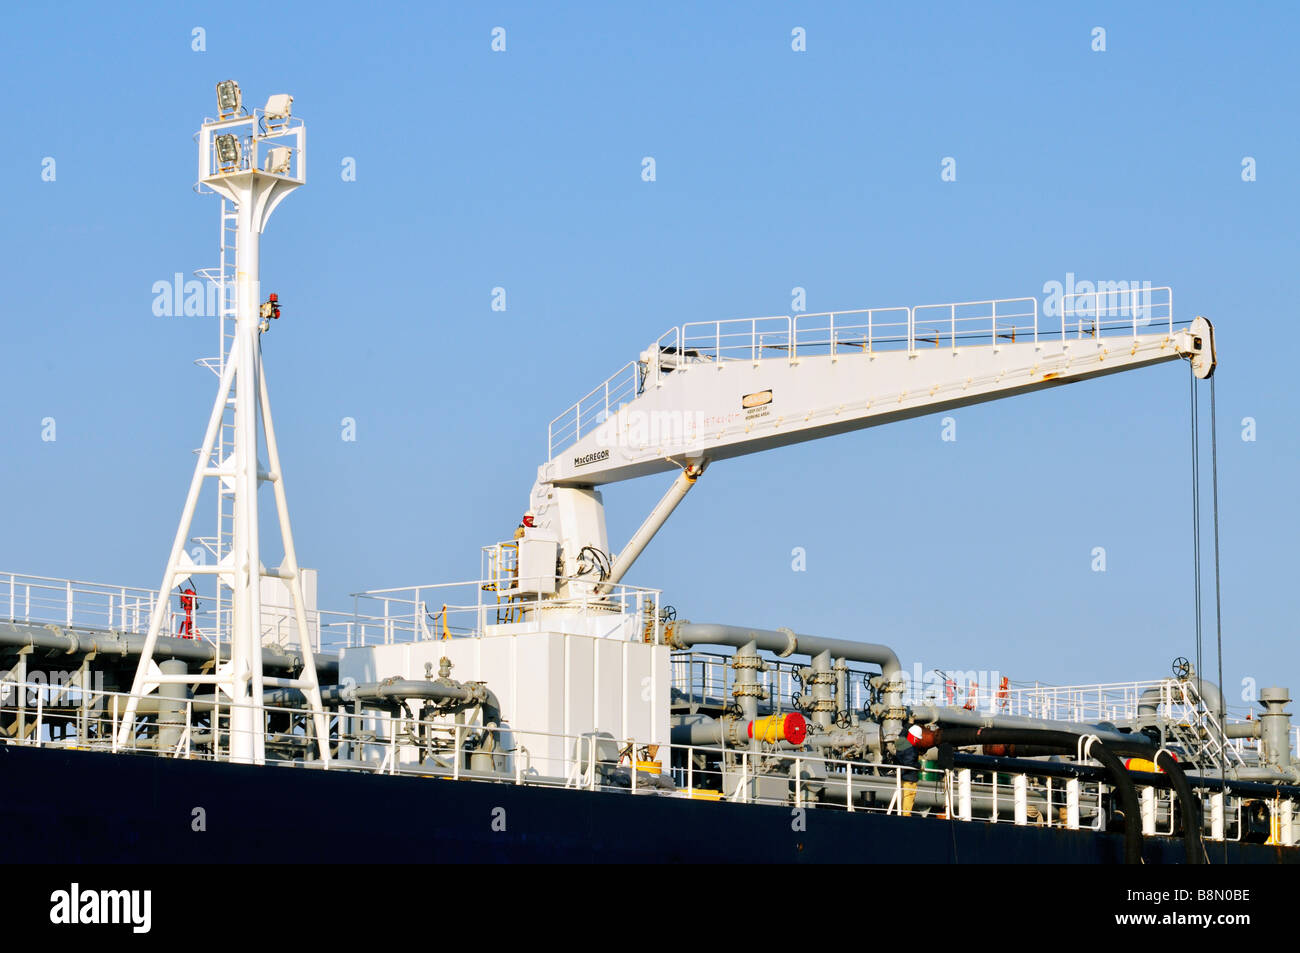 deck-of-oil-tanker-with-crewmen-operatin